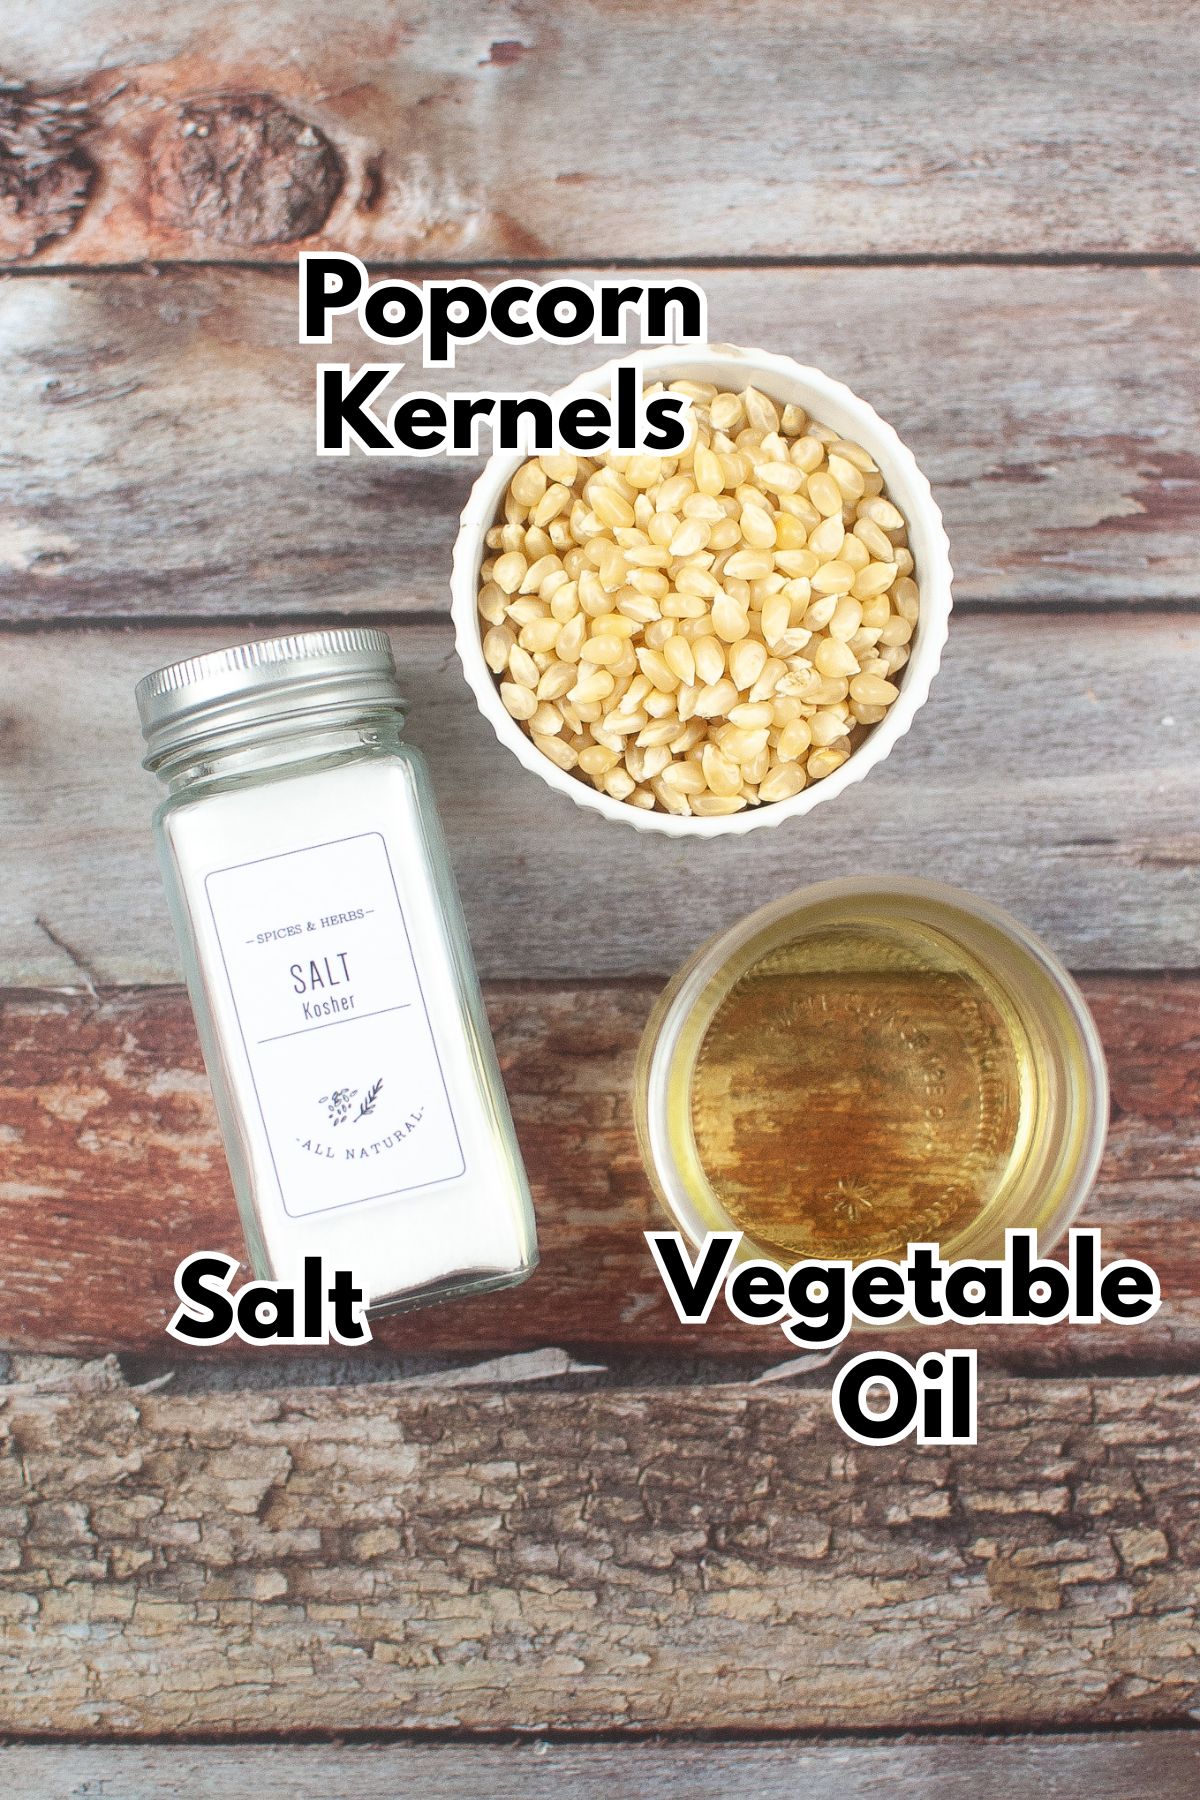 A bowl of popcorn kernels, vegetable oil and a jar of salt on a wooden surface.